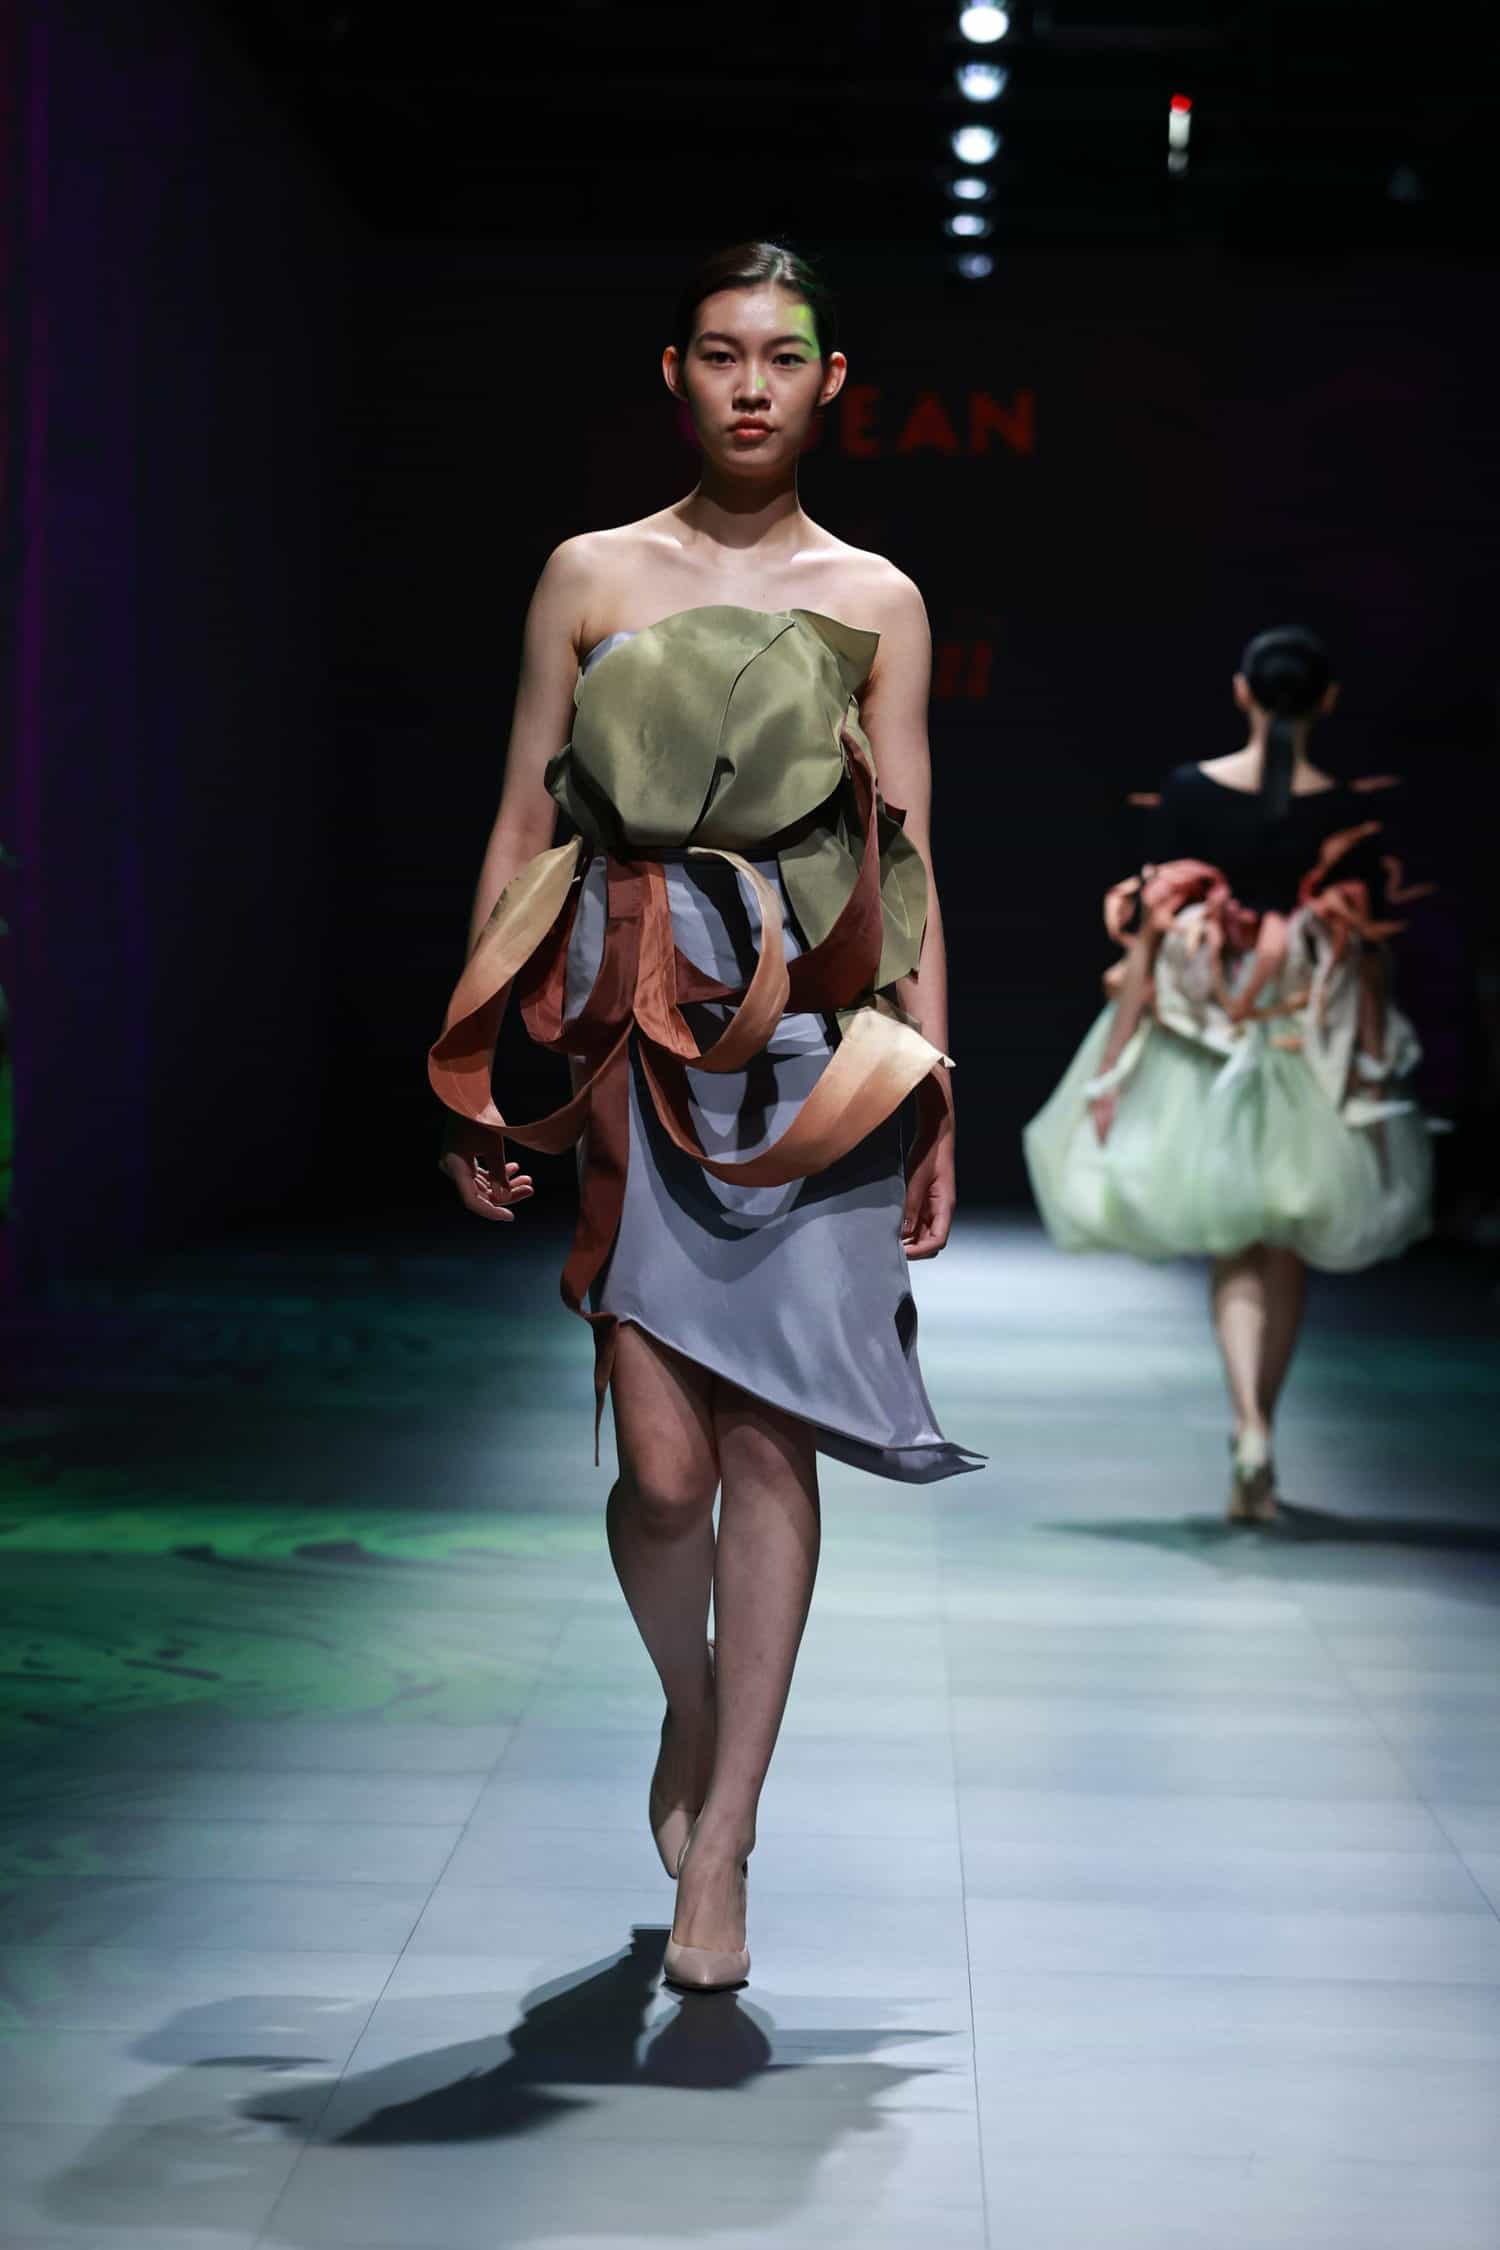 Taipei Fashion Week 臺北時裝週 on X: See the premium function